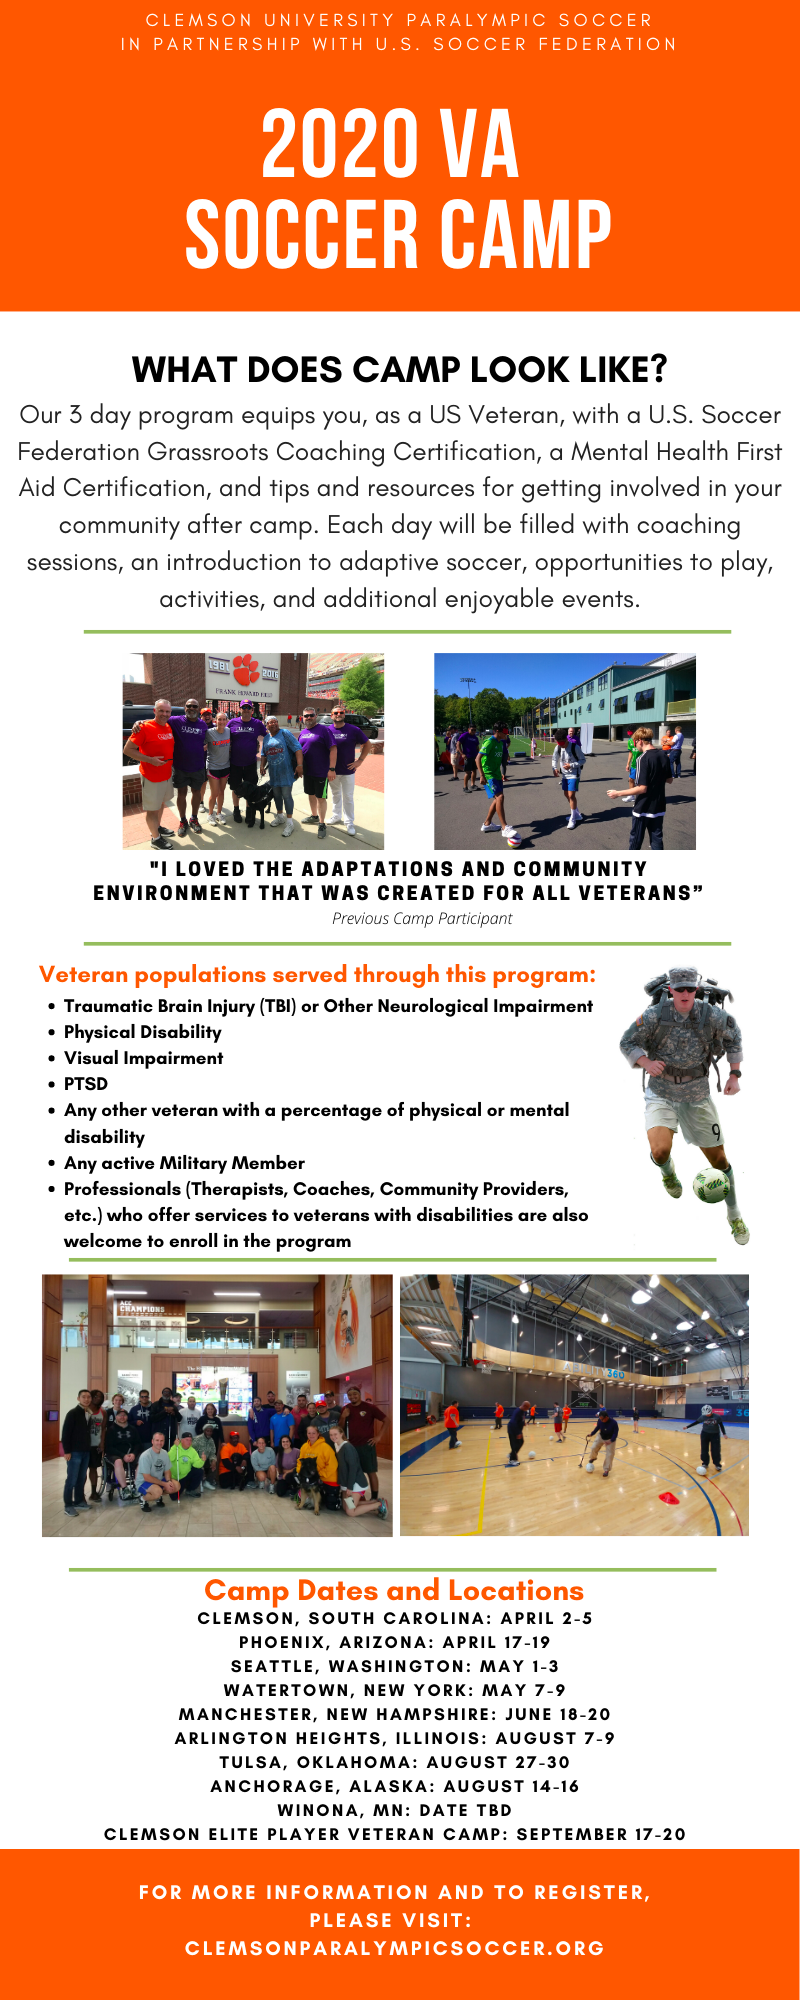 Clemson University's Paralympic Soccer Program — VETSports